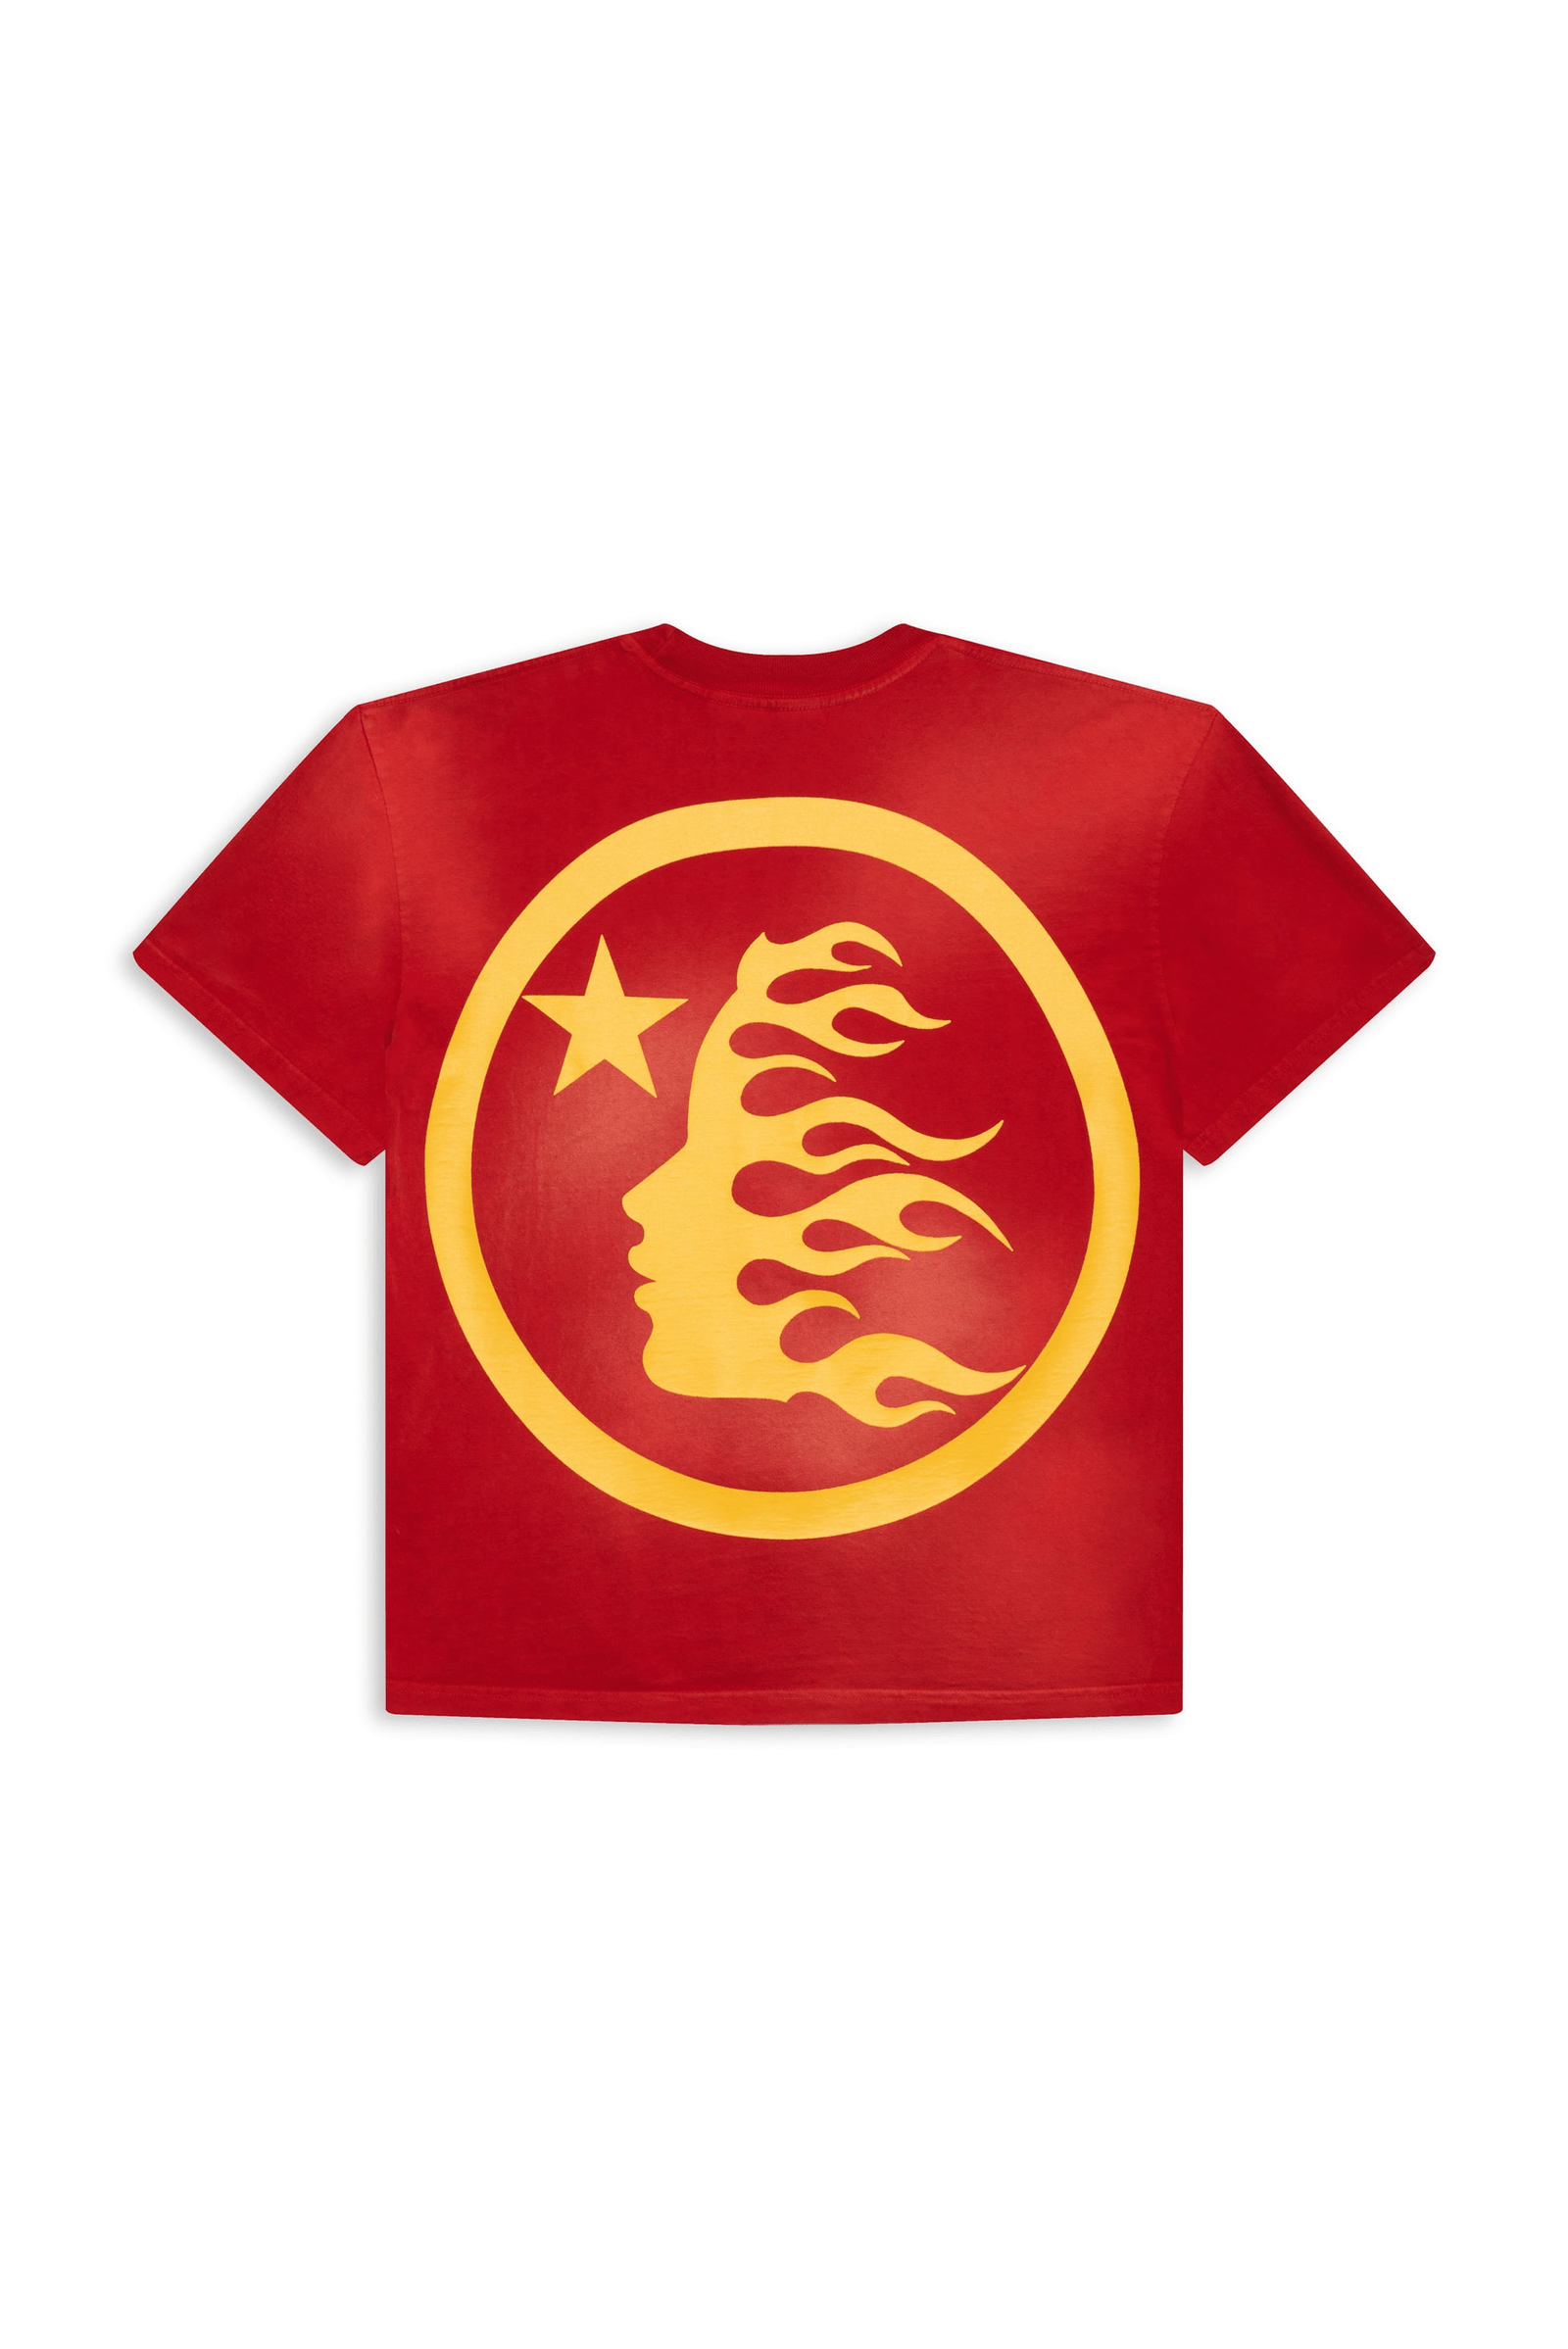 Hellstar No Guts No Glory T-Shirt Red